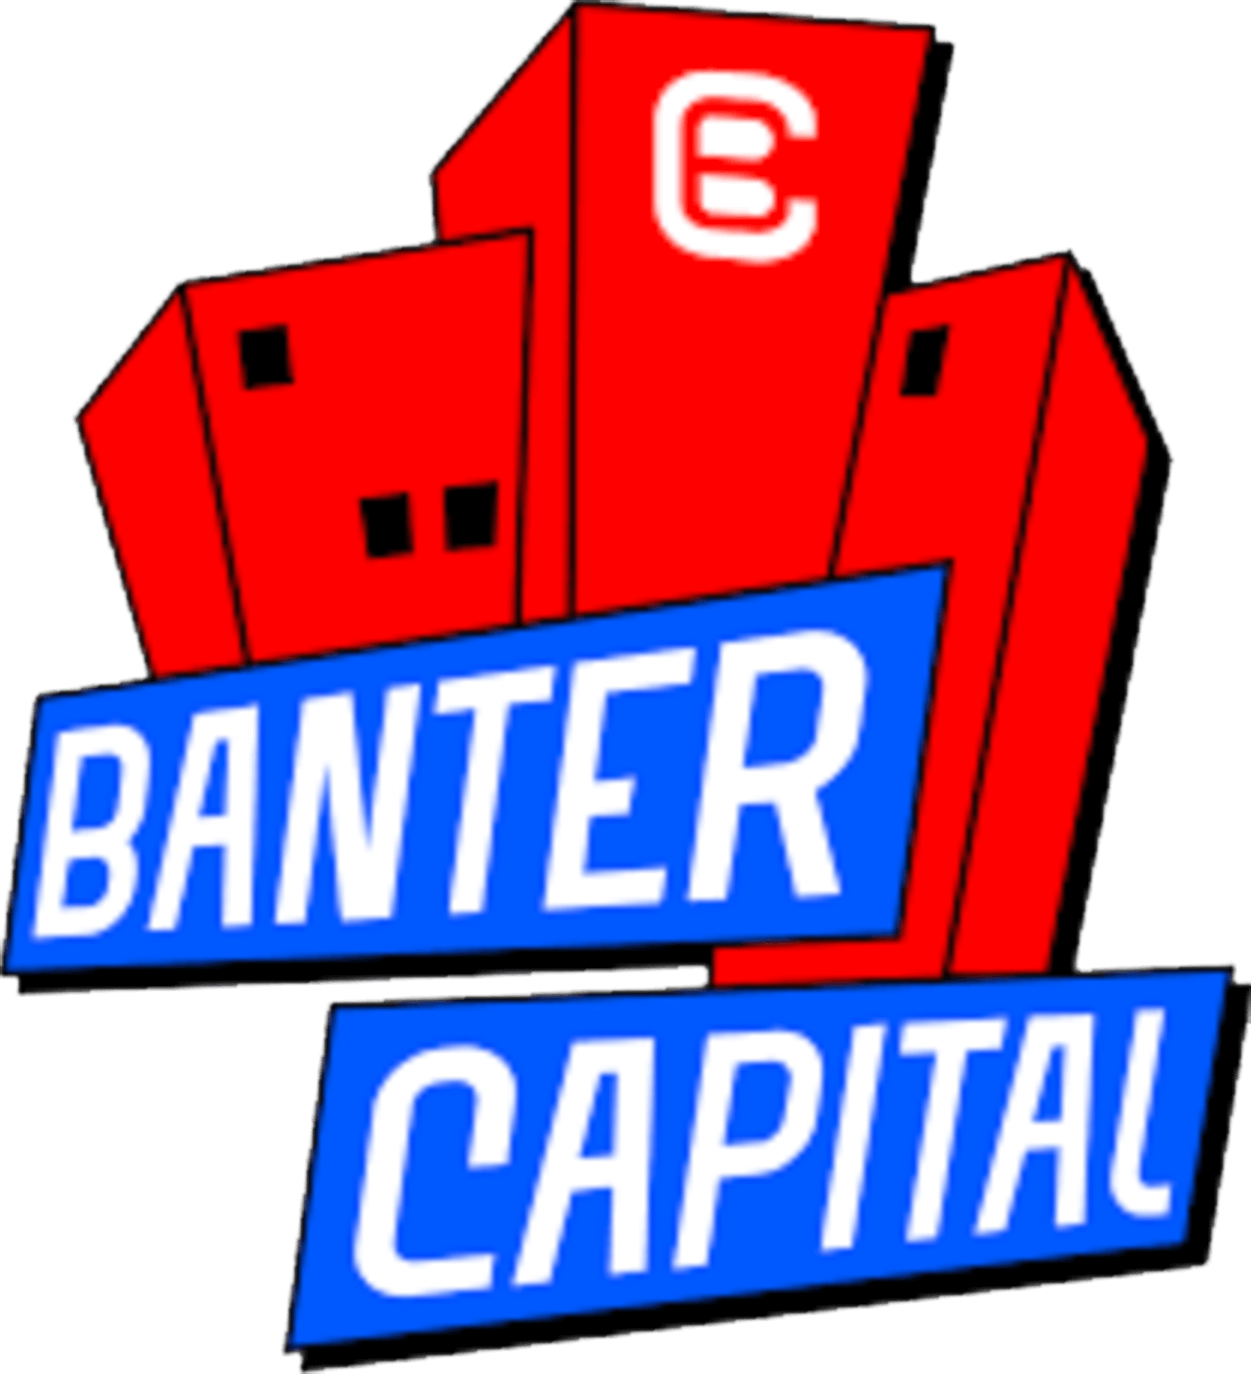 Banter Capital